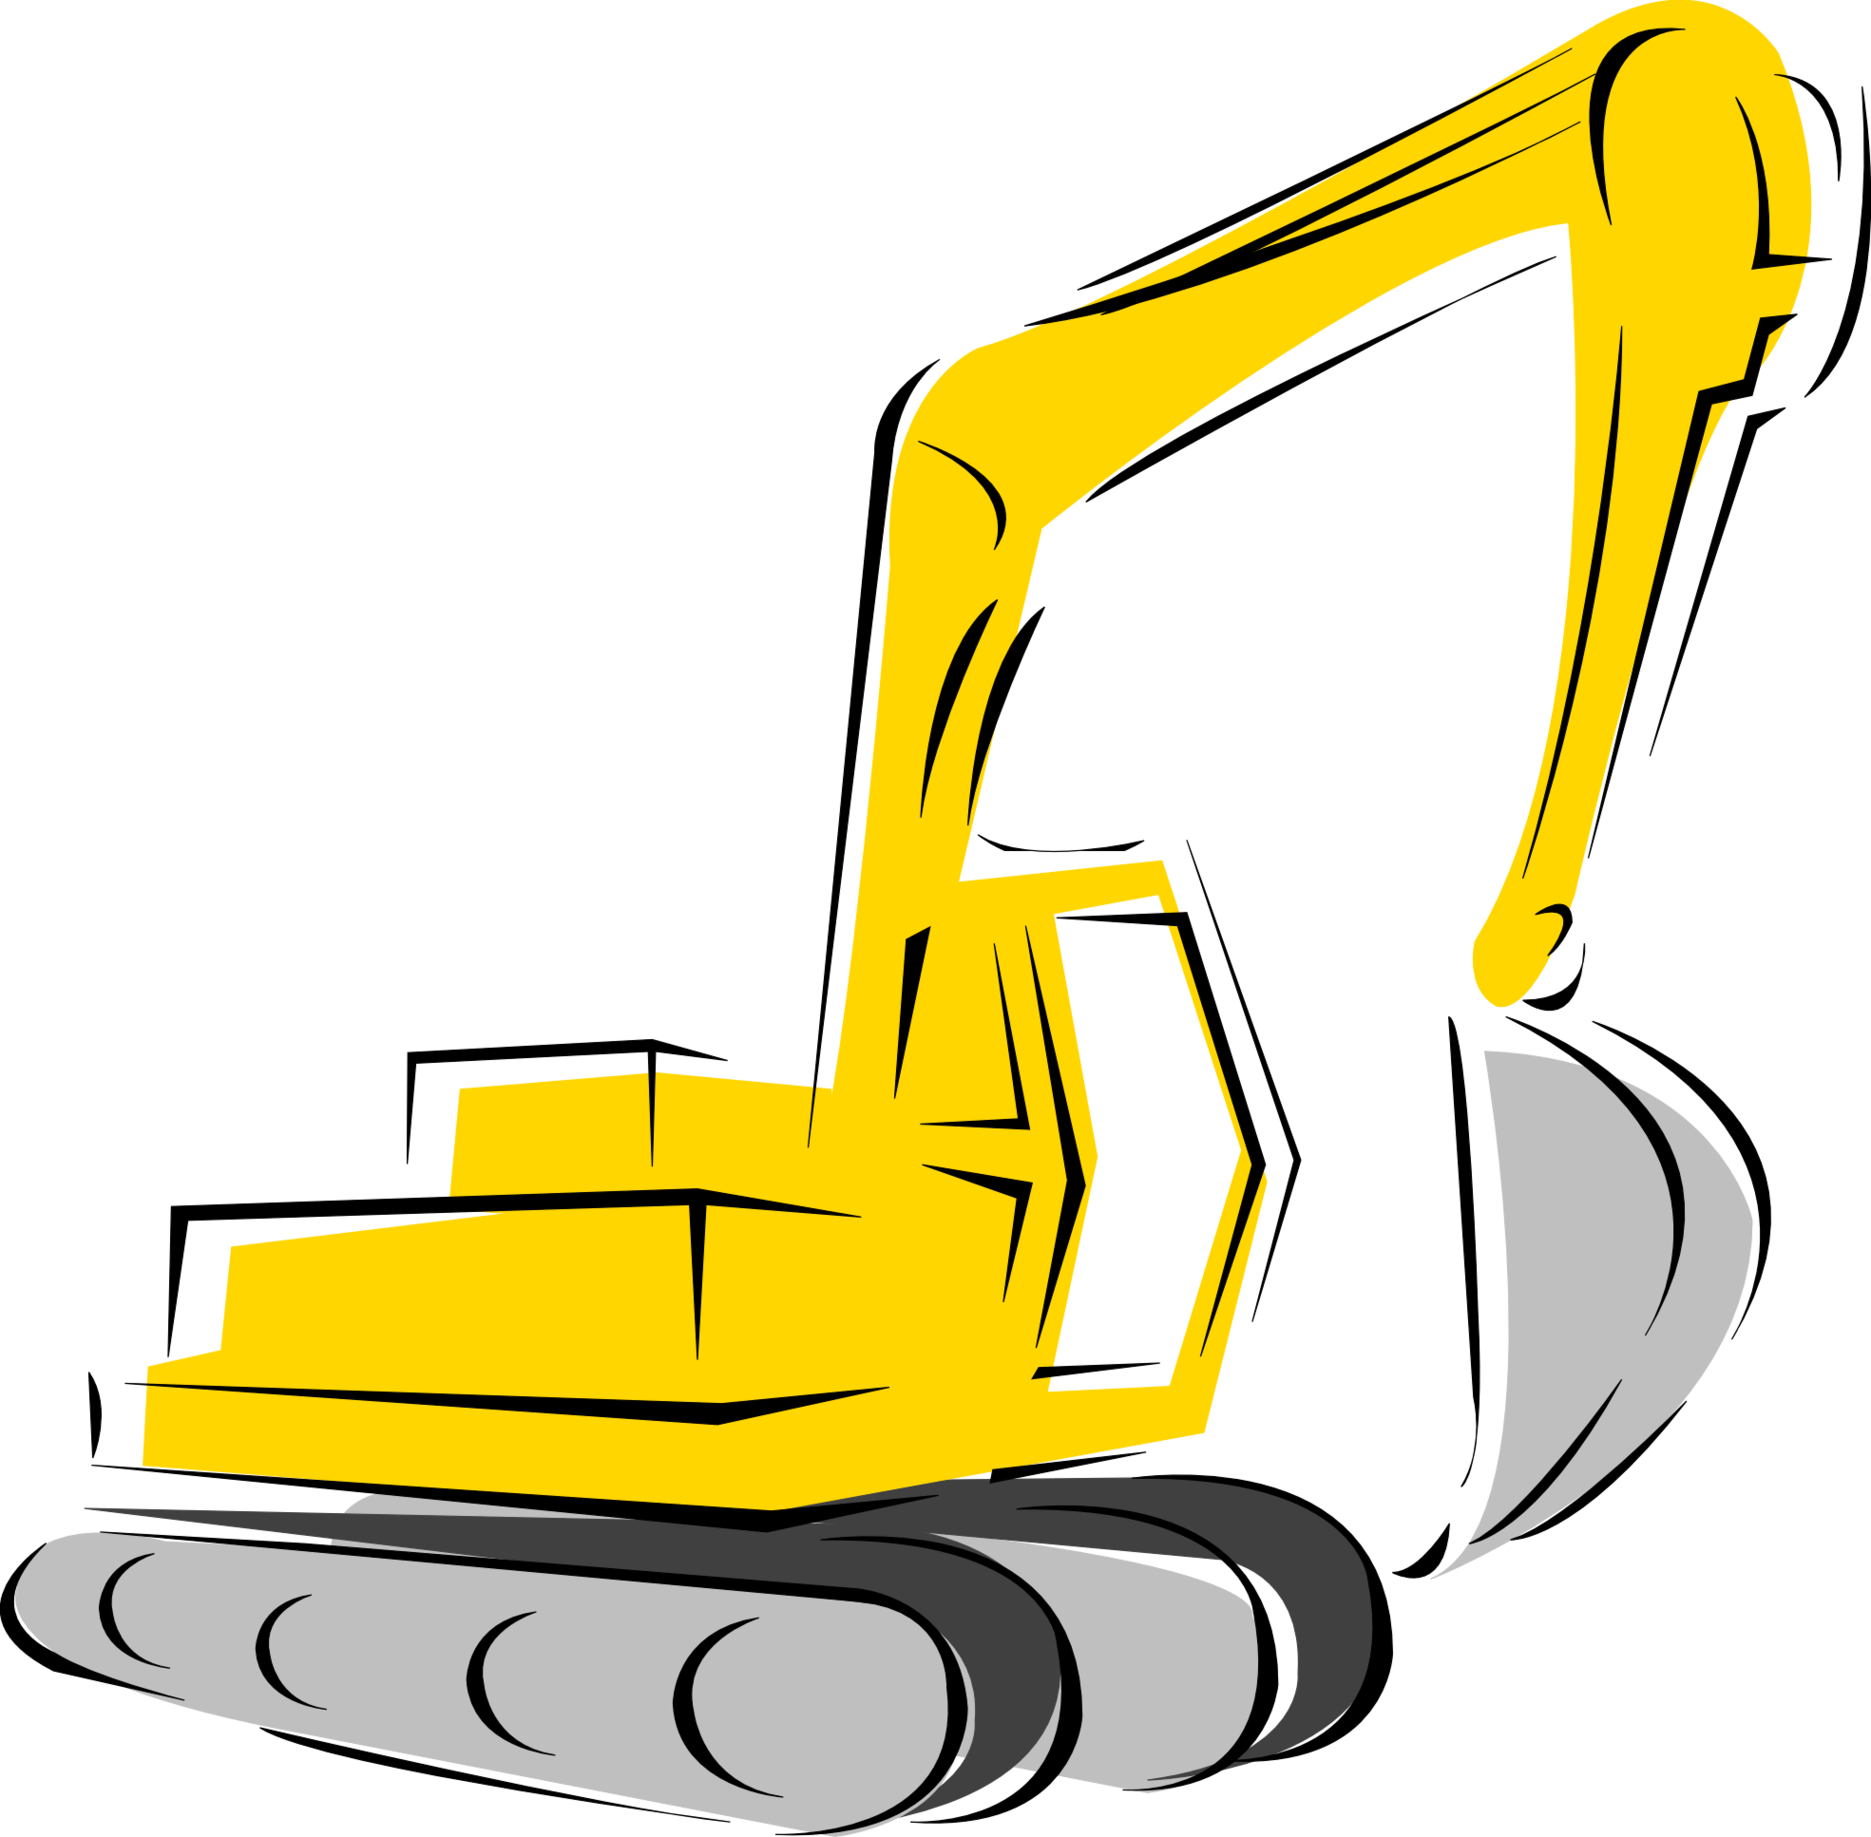 Heavy equipment silhouette at. Excavator clipart construction machine